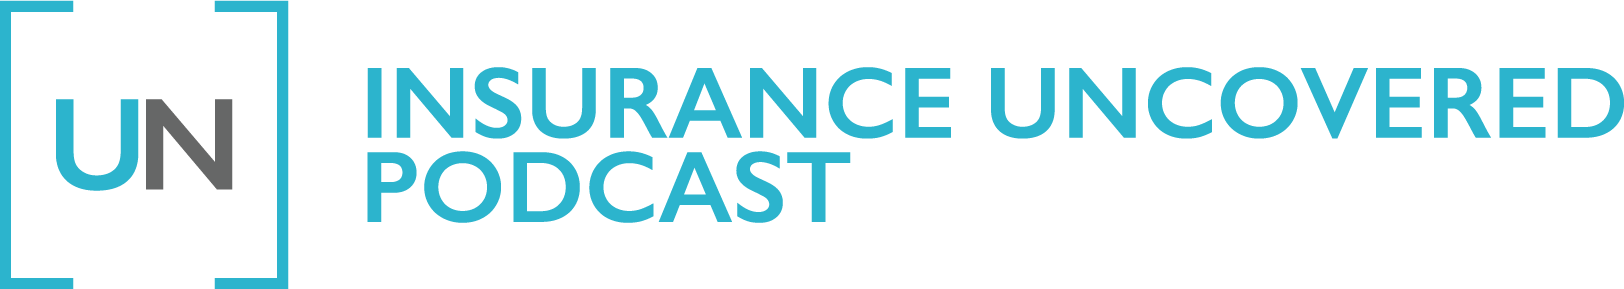 NAMIC Insurance Uncovered Podcast Logo